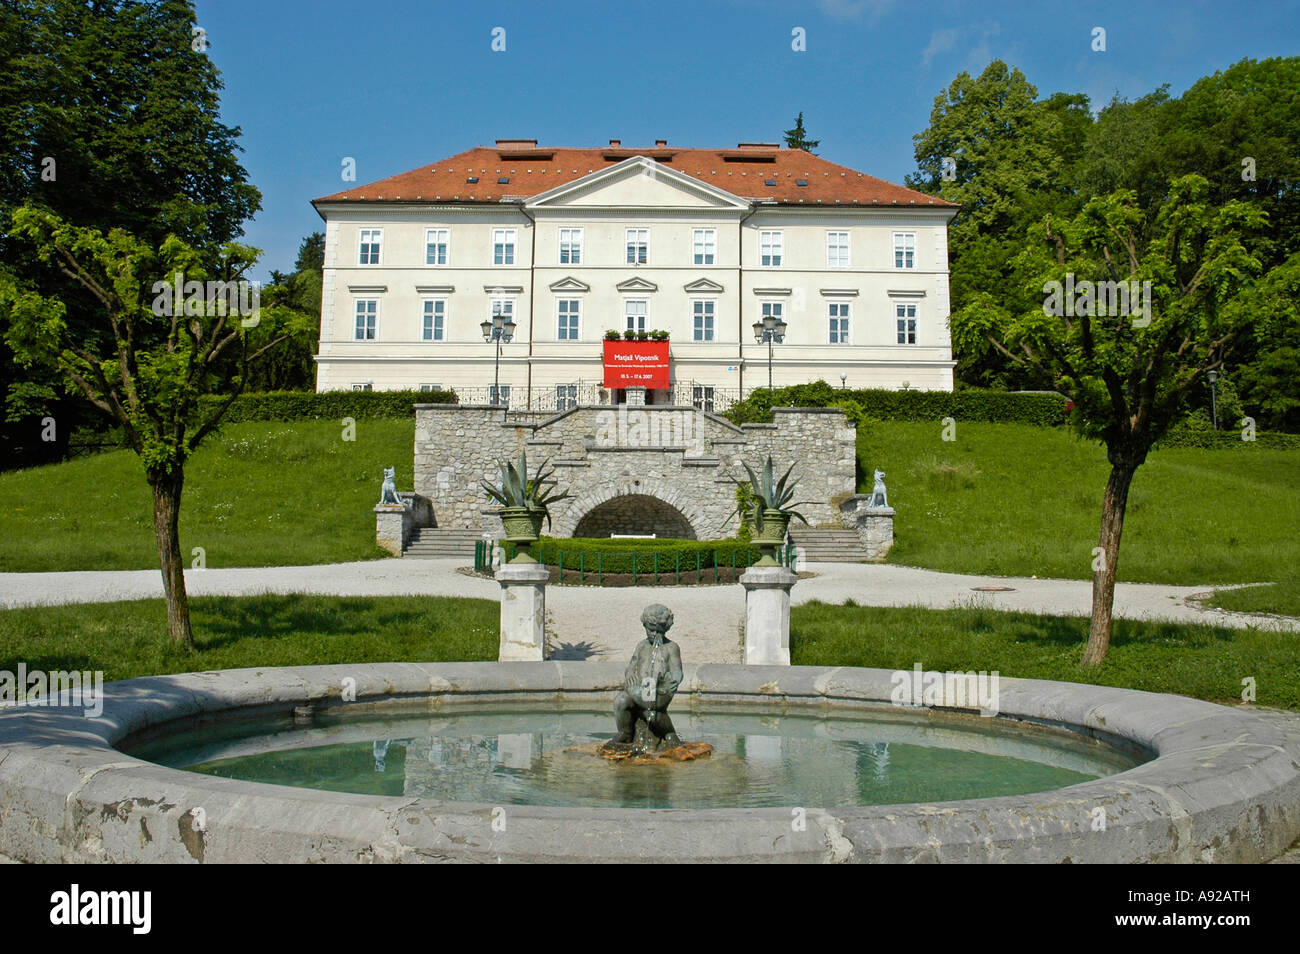 Image result for tivoli castle slovenia